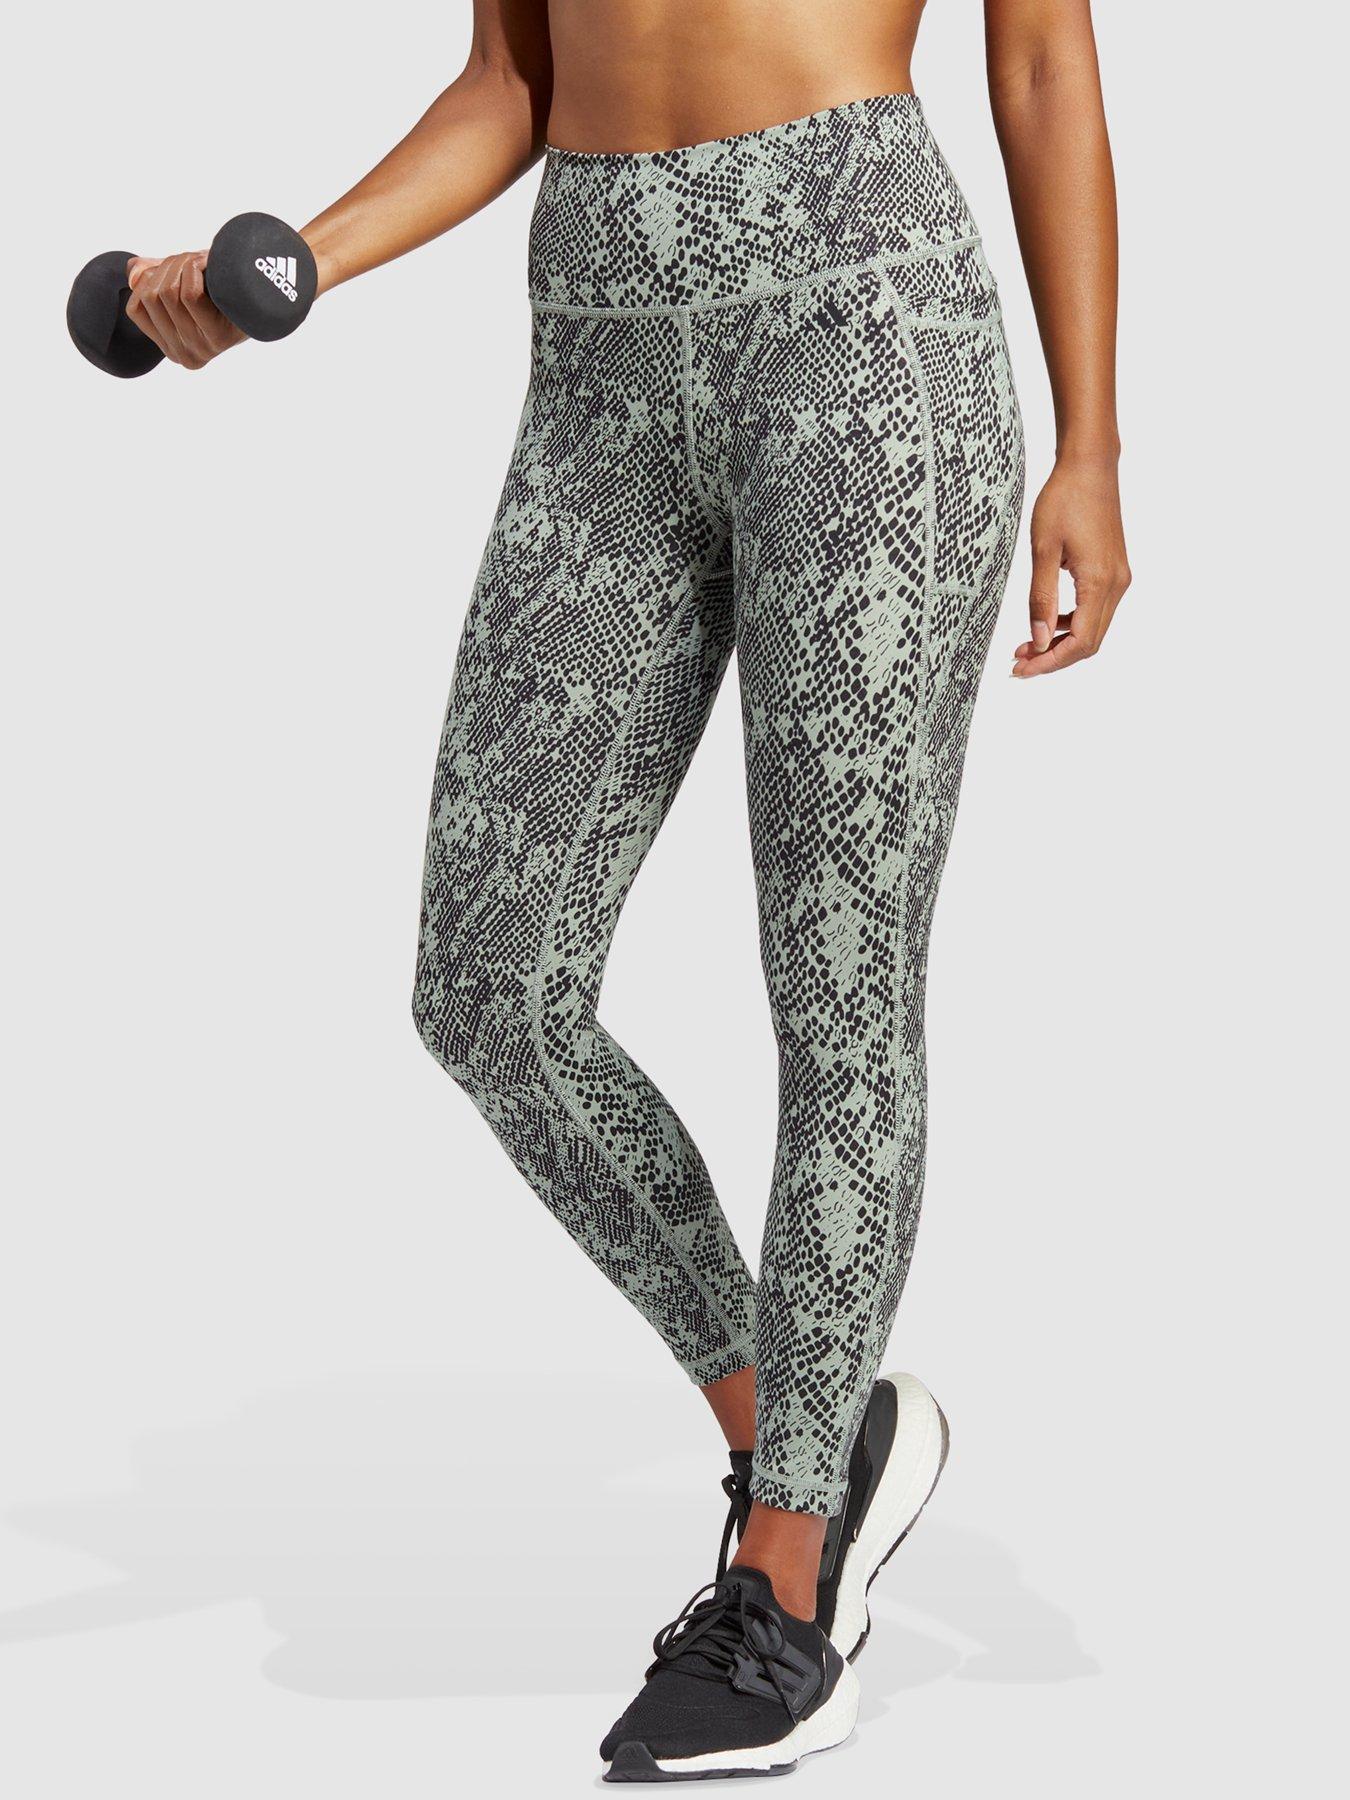 Nike Pro Training Plus 365 7/8 leggings in khaki